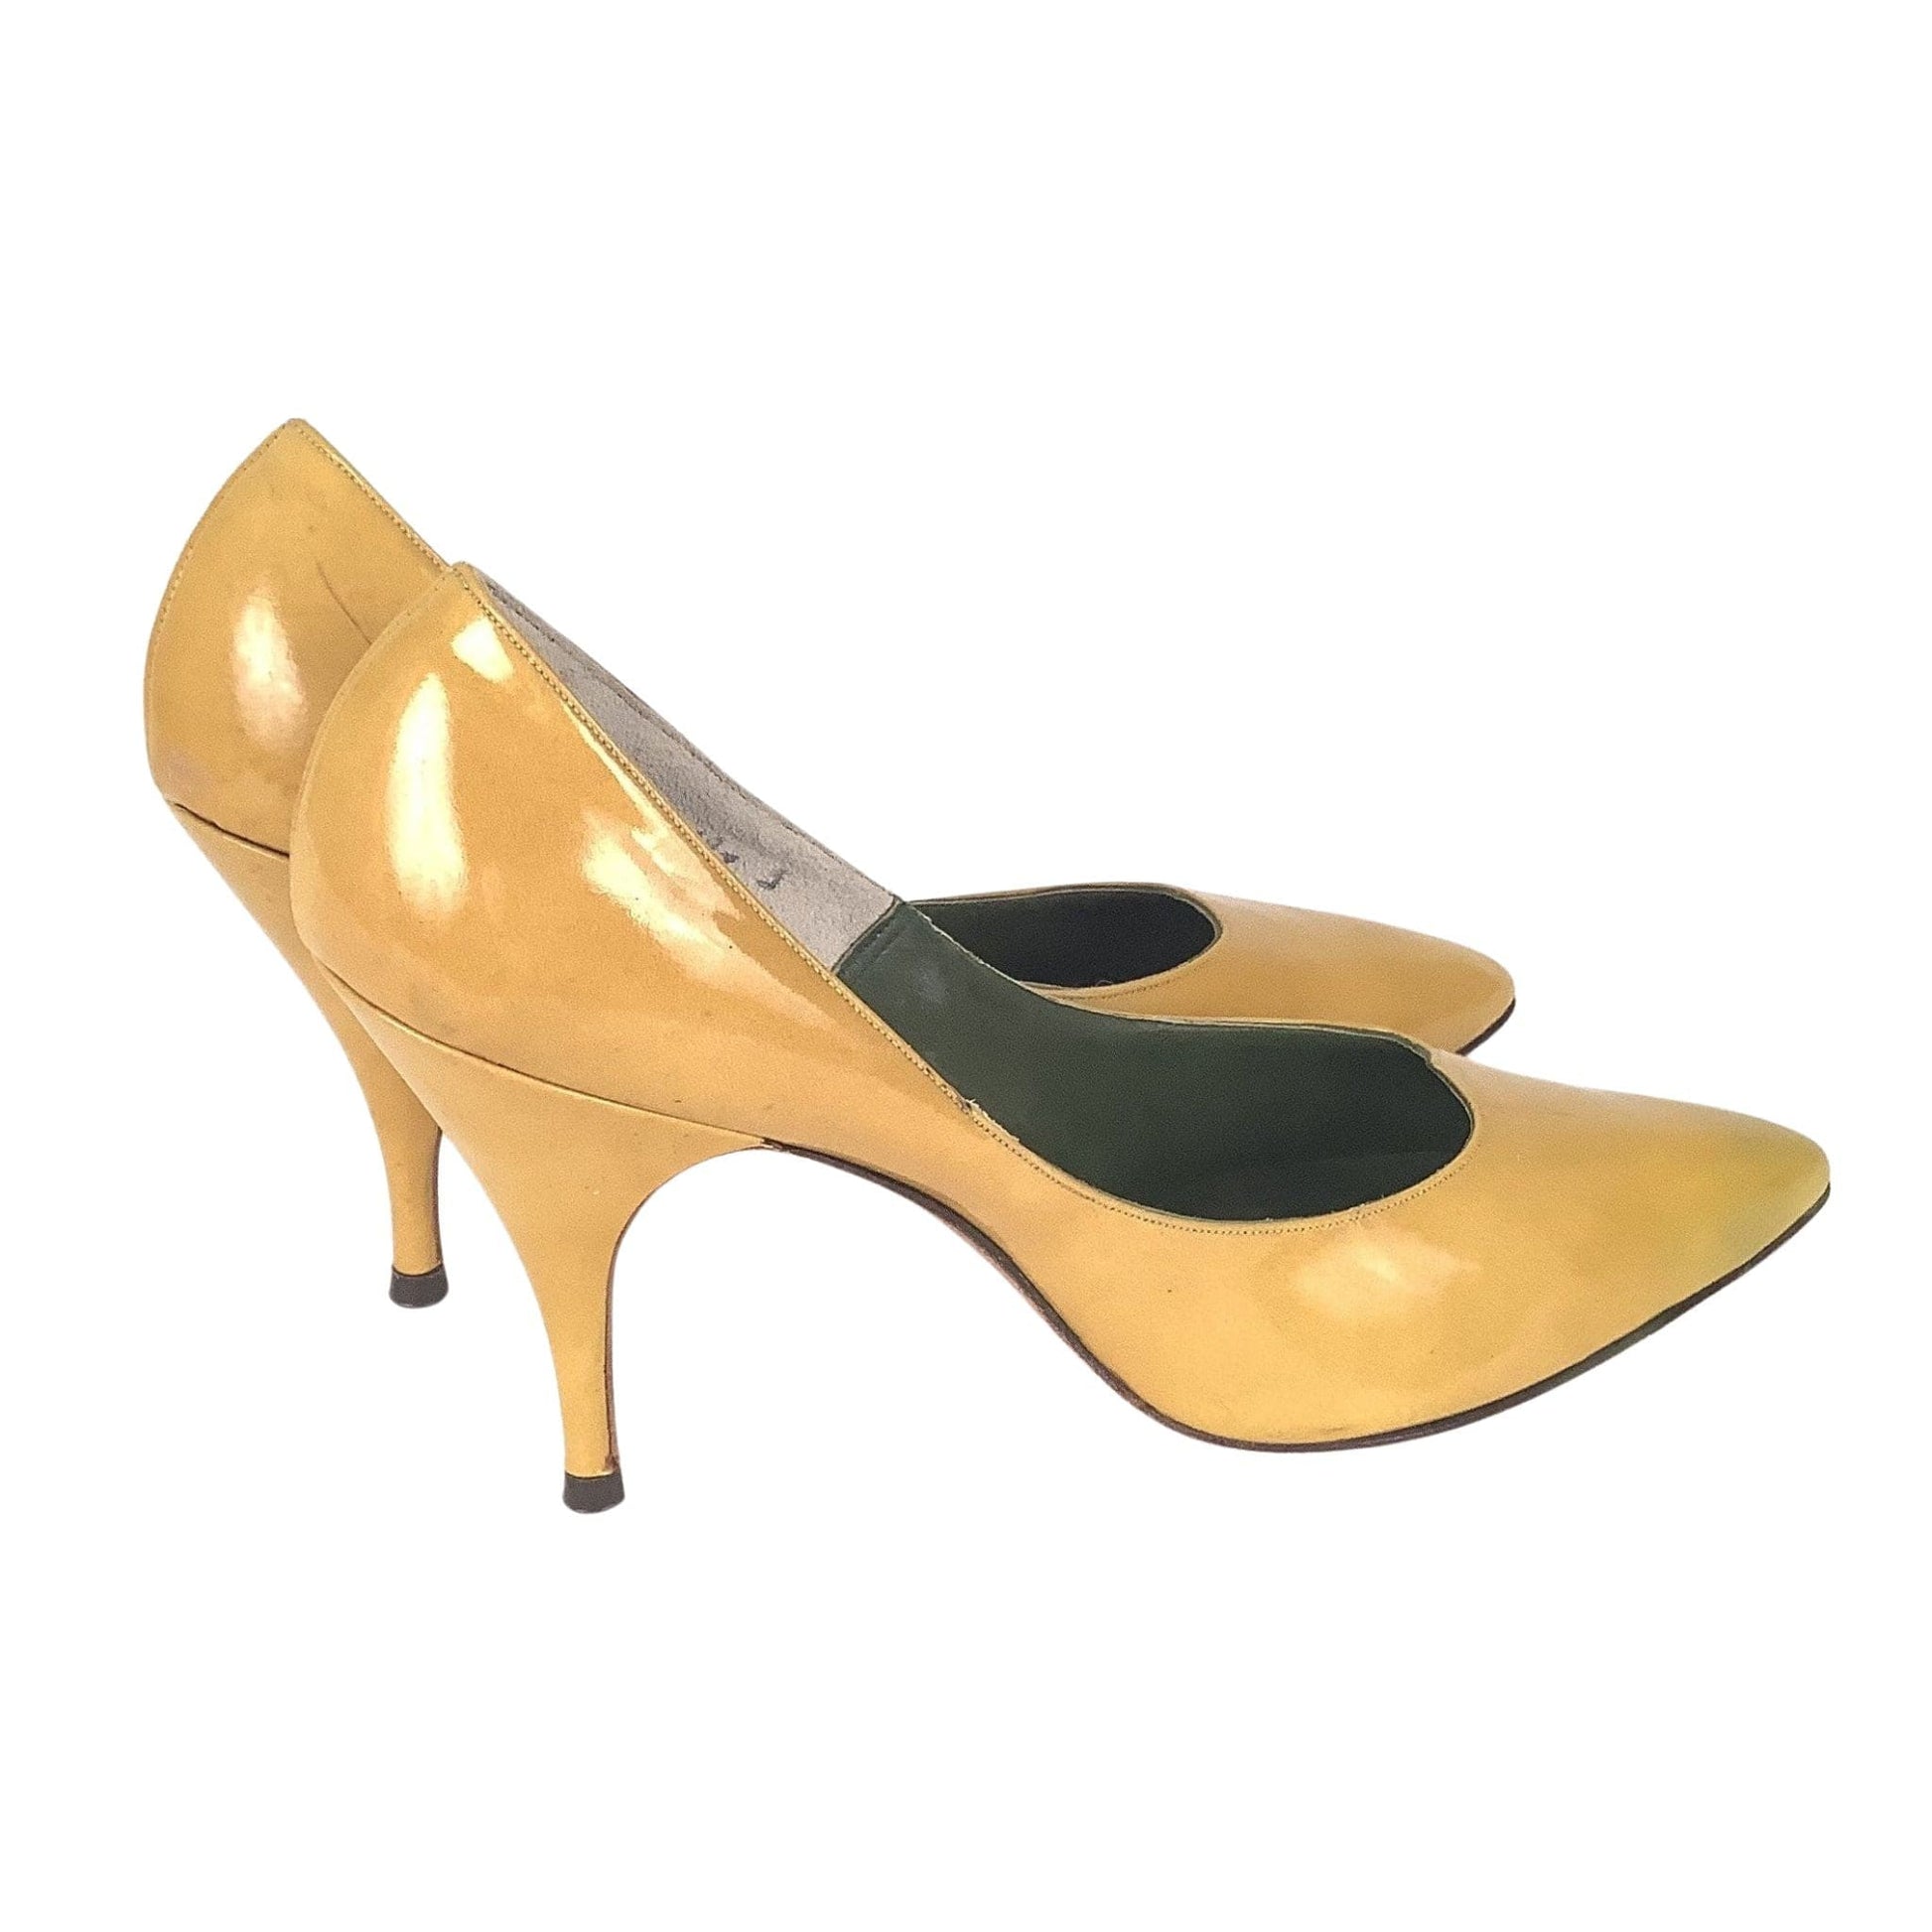 Vintage Rockabilly Heels 9 / Yellow / Vintage 1950s